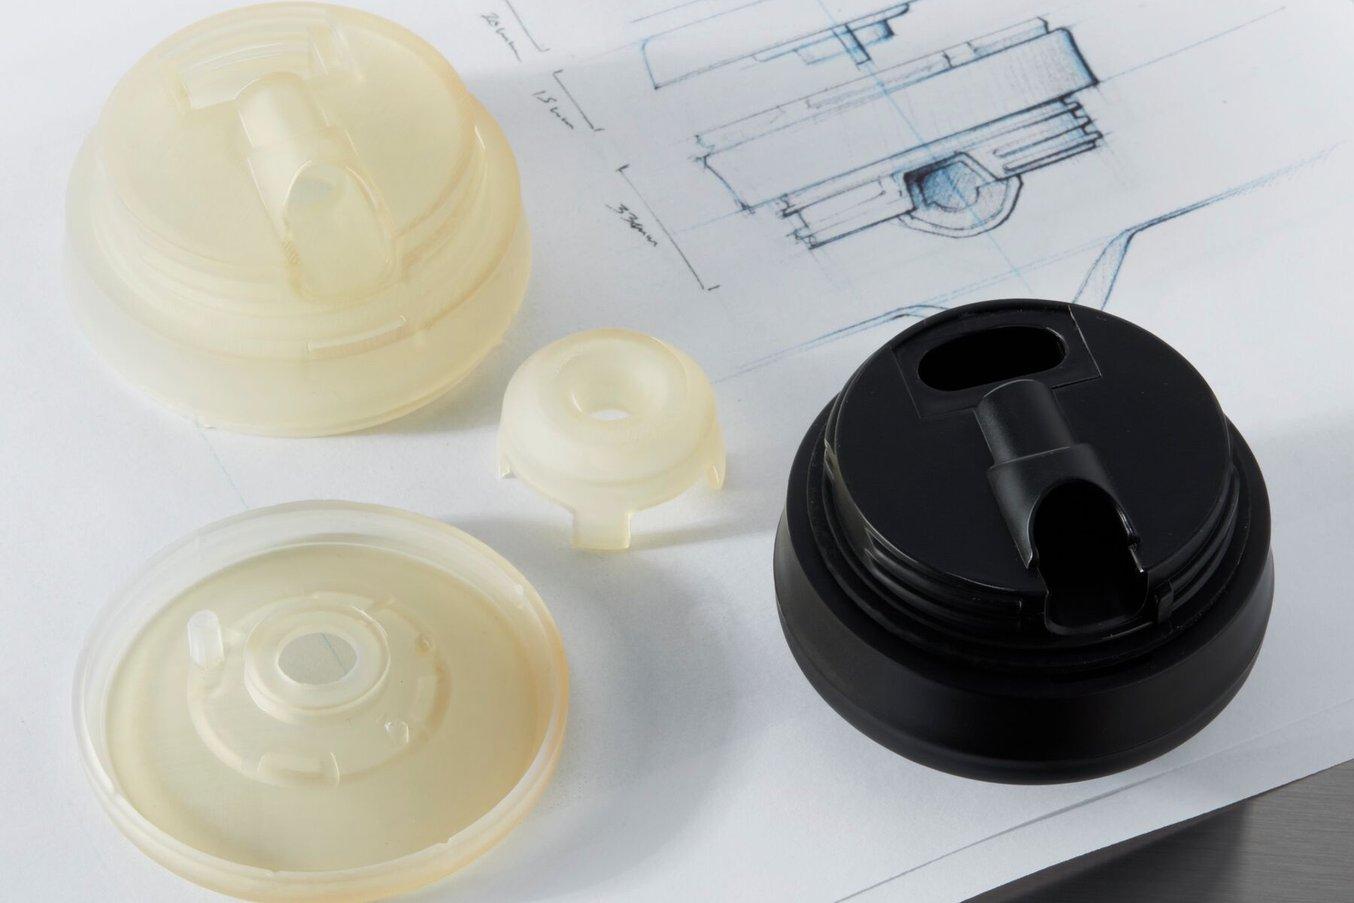 3D printed coffee pot lids